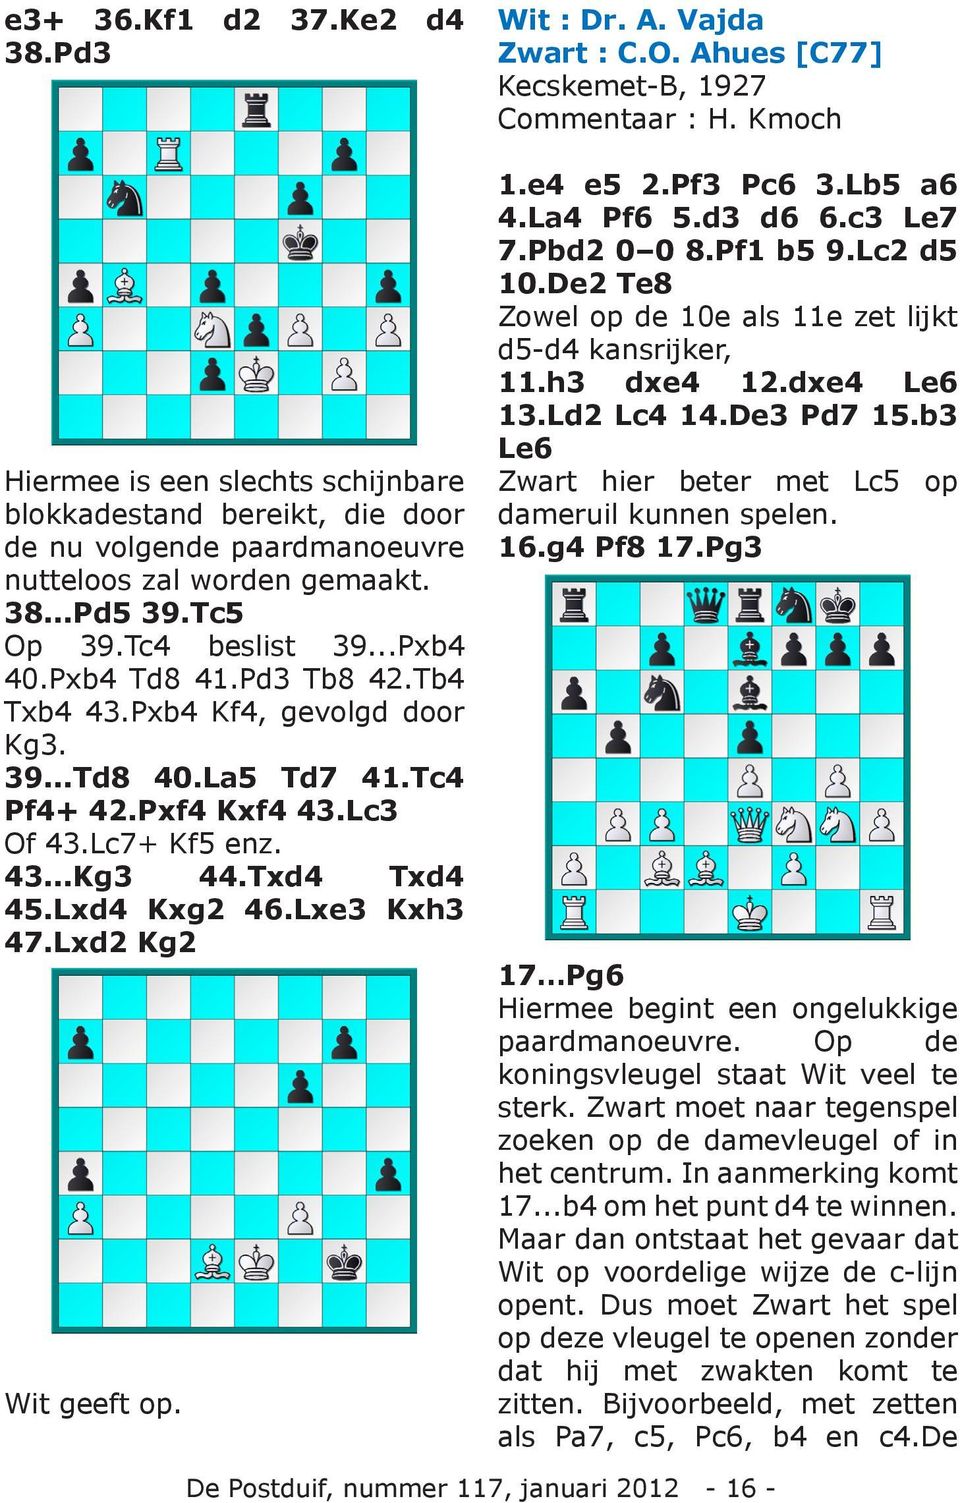 Lxd2 Kg2 Wit geeft op. Wit : Dr. A. Vajda Zwart : C.O. Ahues [C77] Kecskemet-B, 1927 Commentaar : H. Kmoch 1.e4 e5 2.Pf3 Pc6 3.Lb5 a6 4.La4 Pf6 5.d3 d6 6.c3 Le7 7.Pbd2 0 0 8.Pf1 b5 9.Lc2 d5 10.